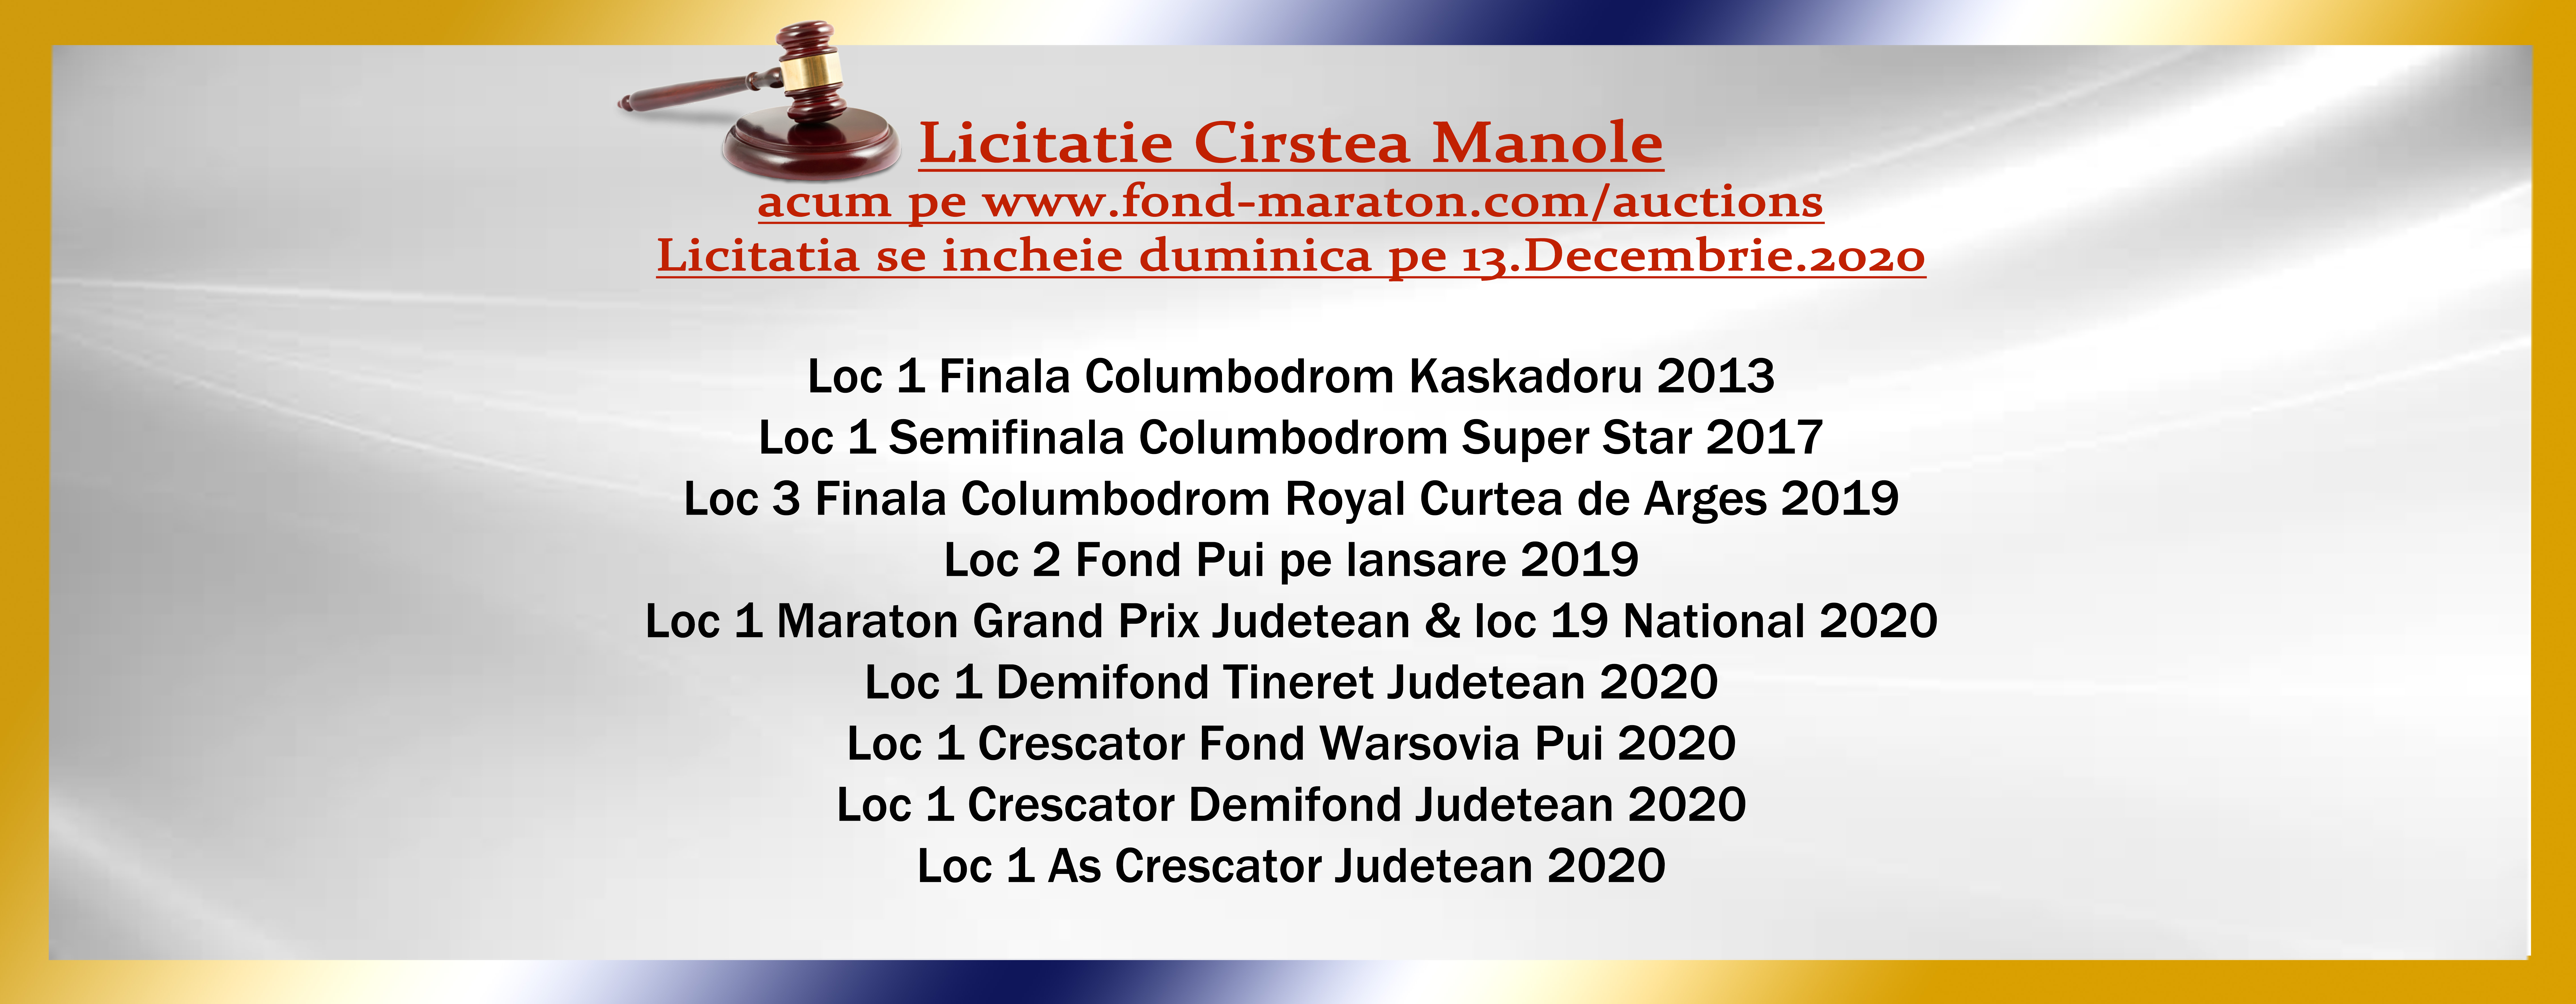 Licitatie Cirstea Manole, loc 1 Finala Columbodrom KASKADORU